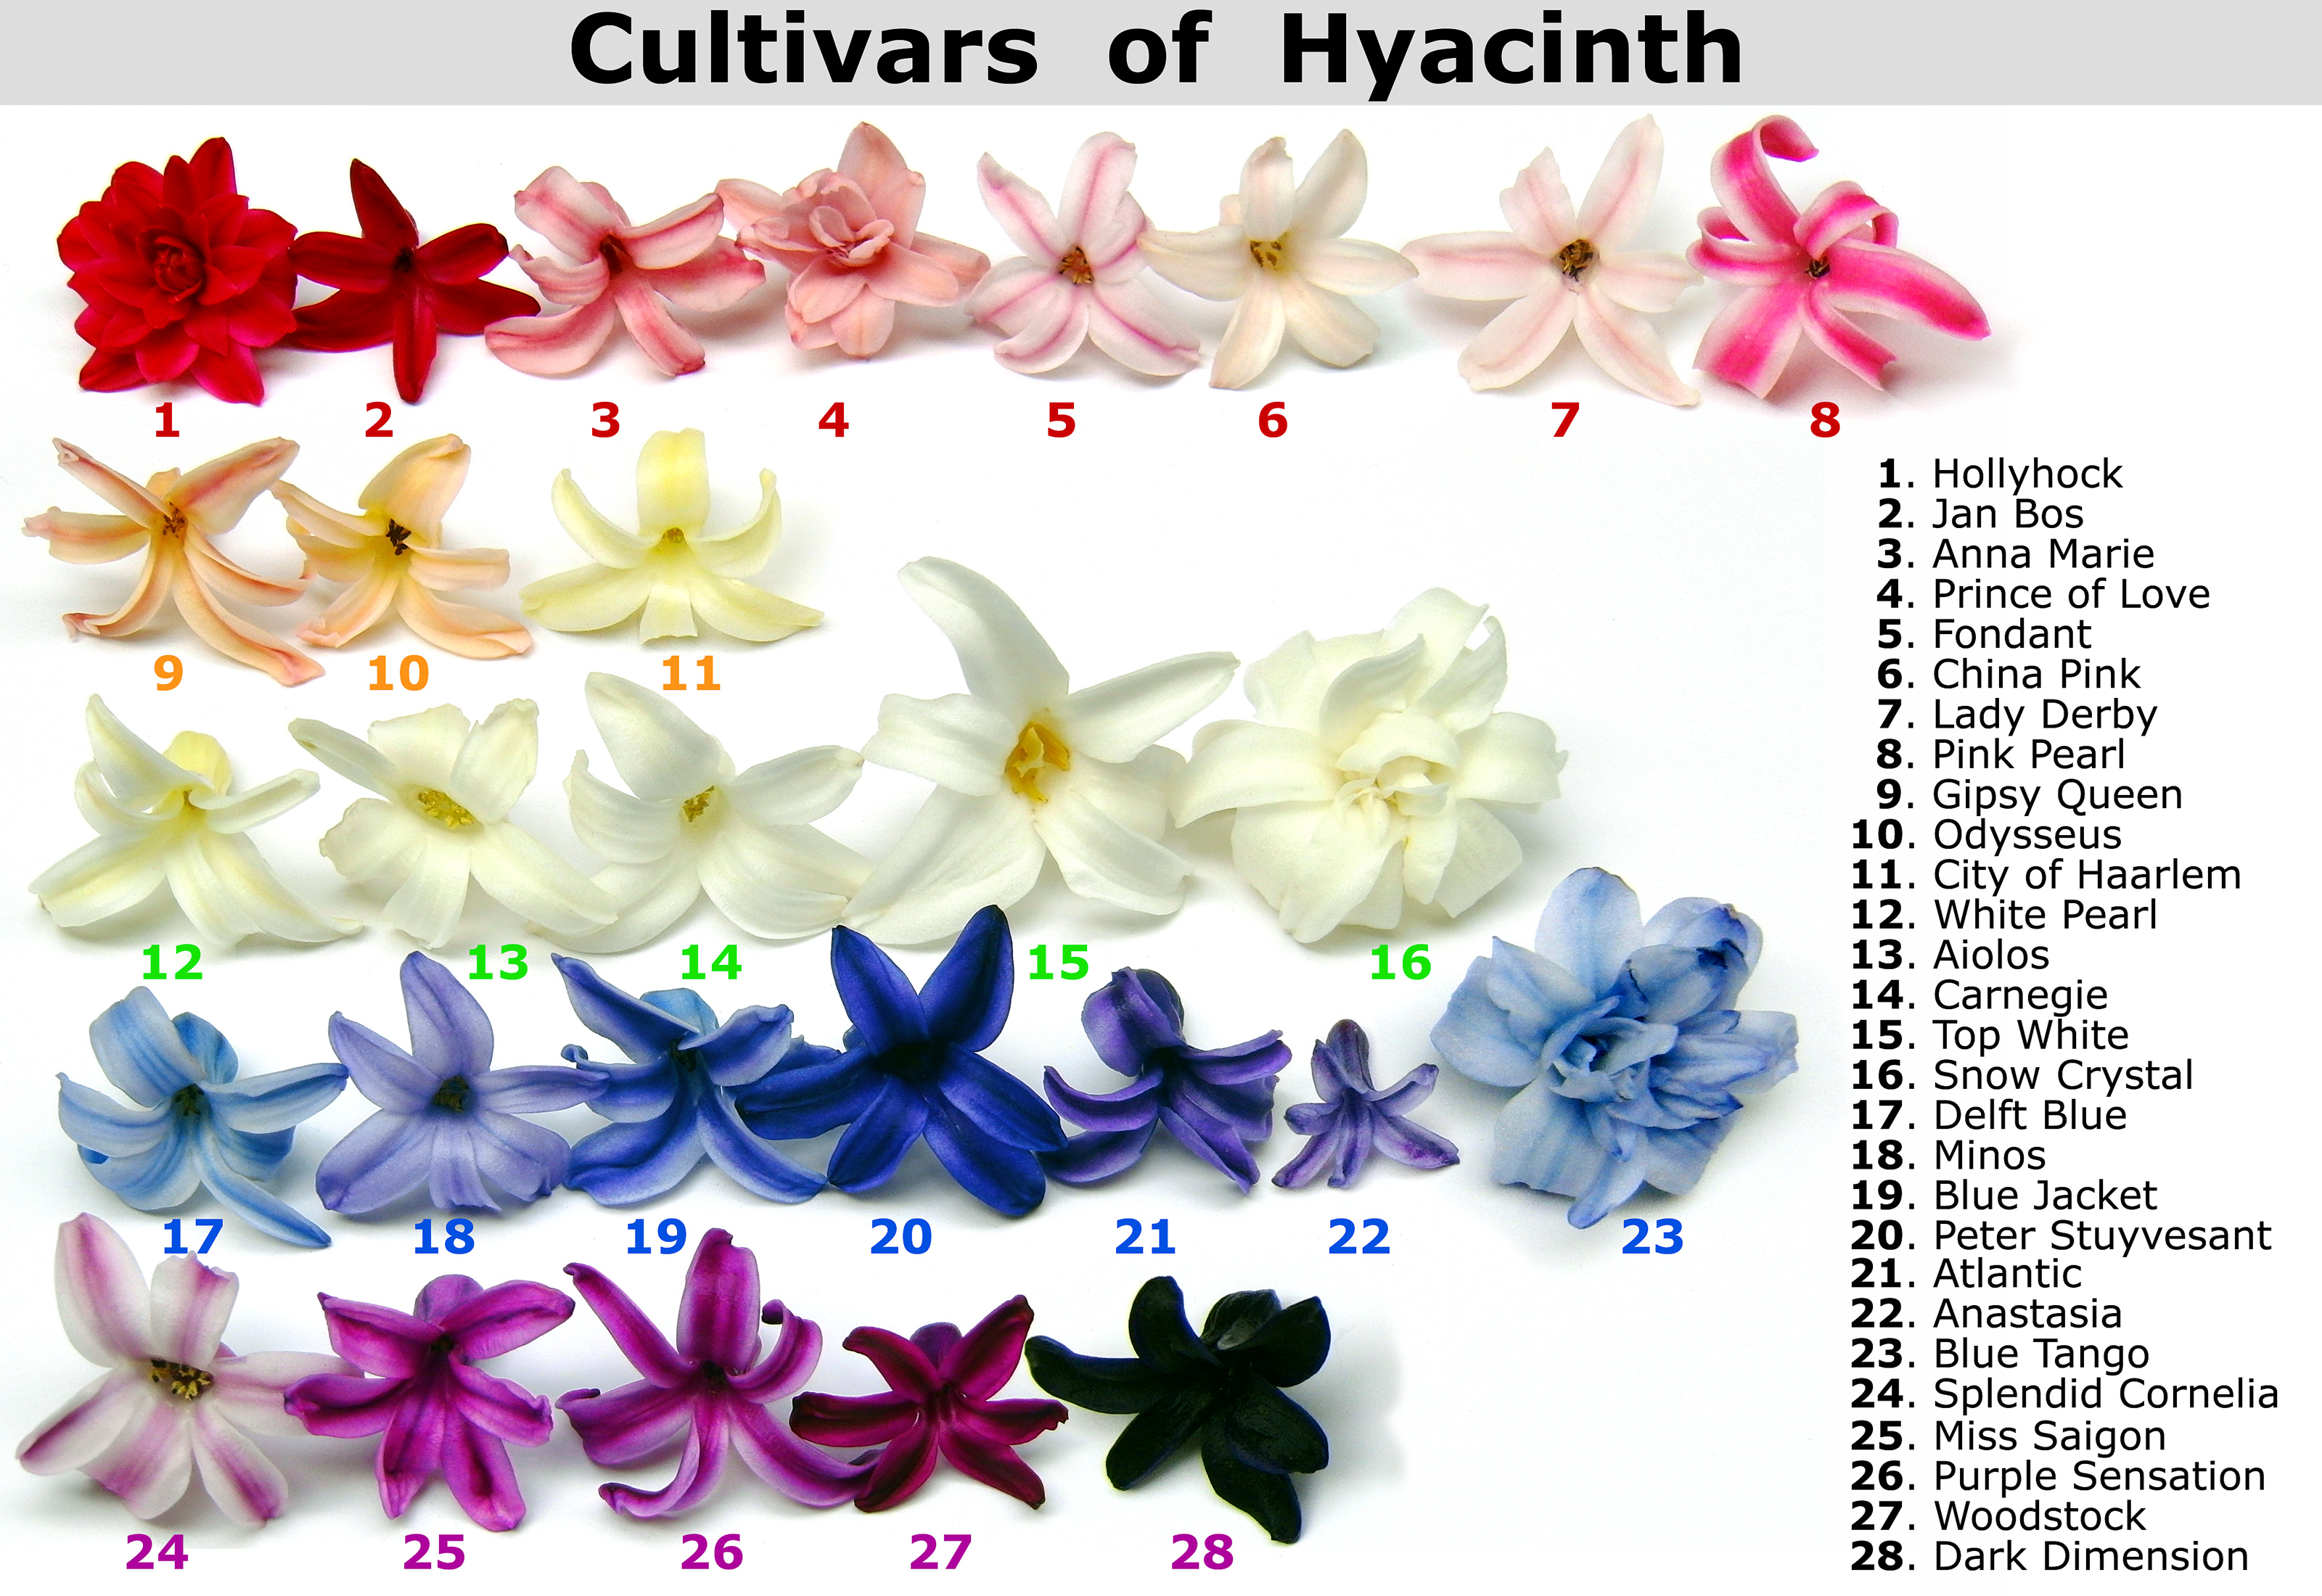 Cultivars of Hyacinth